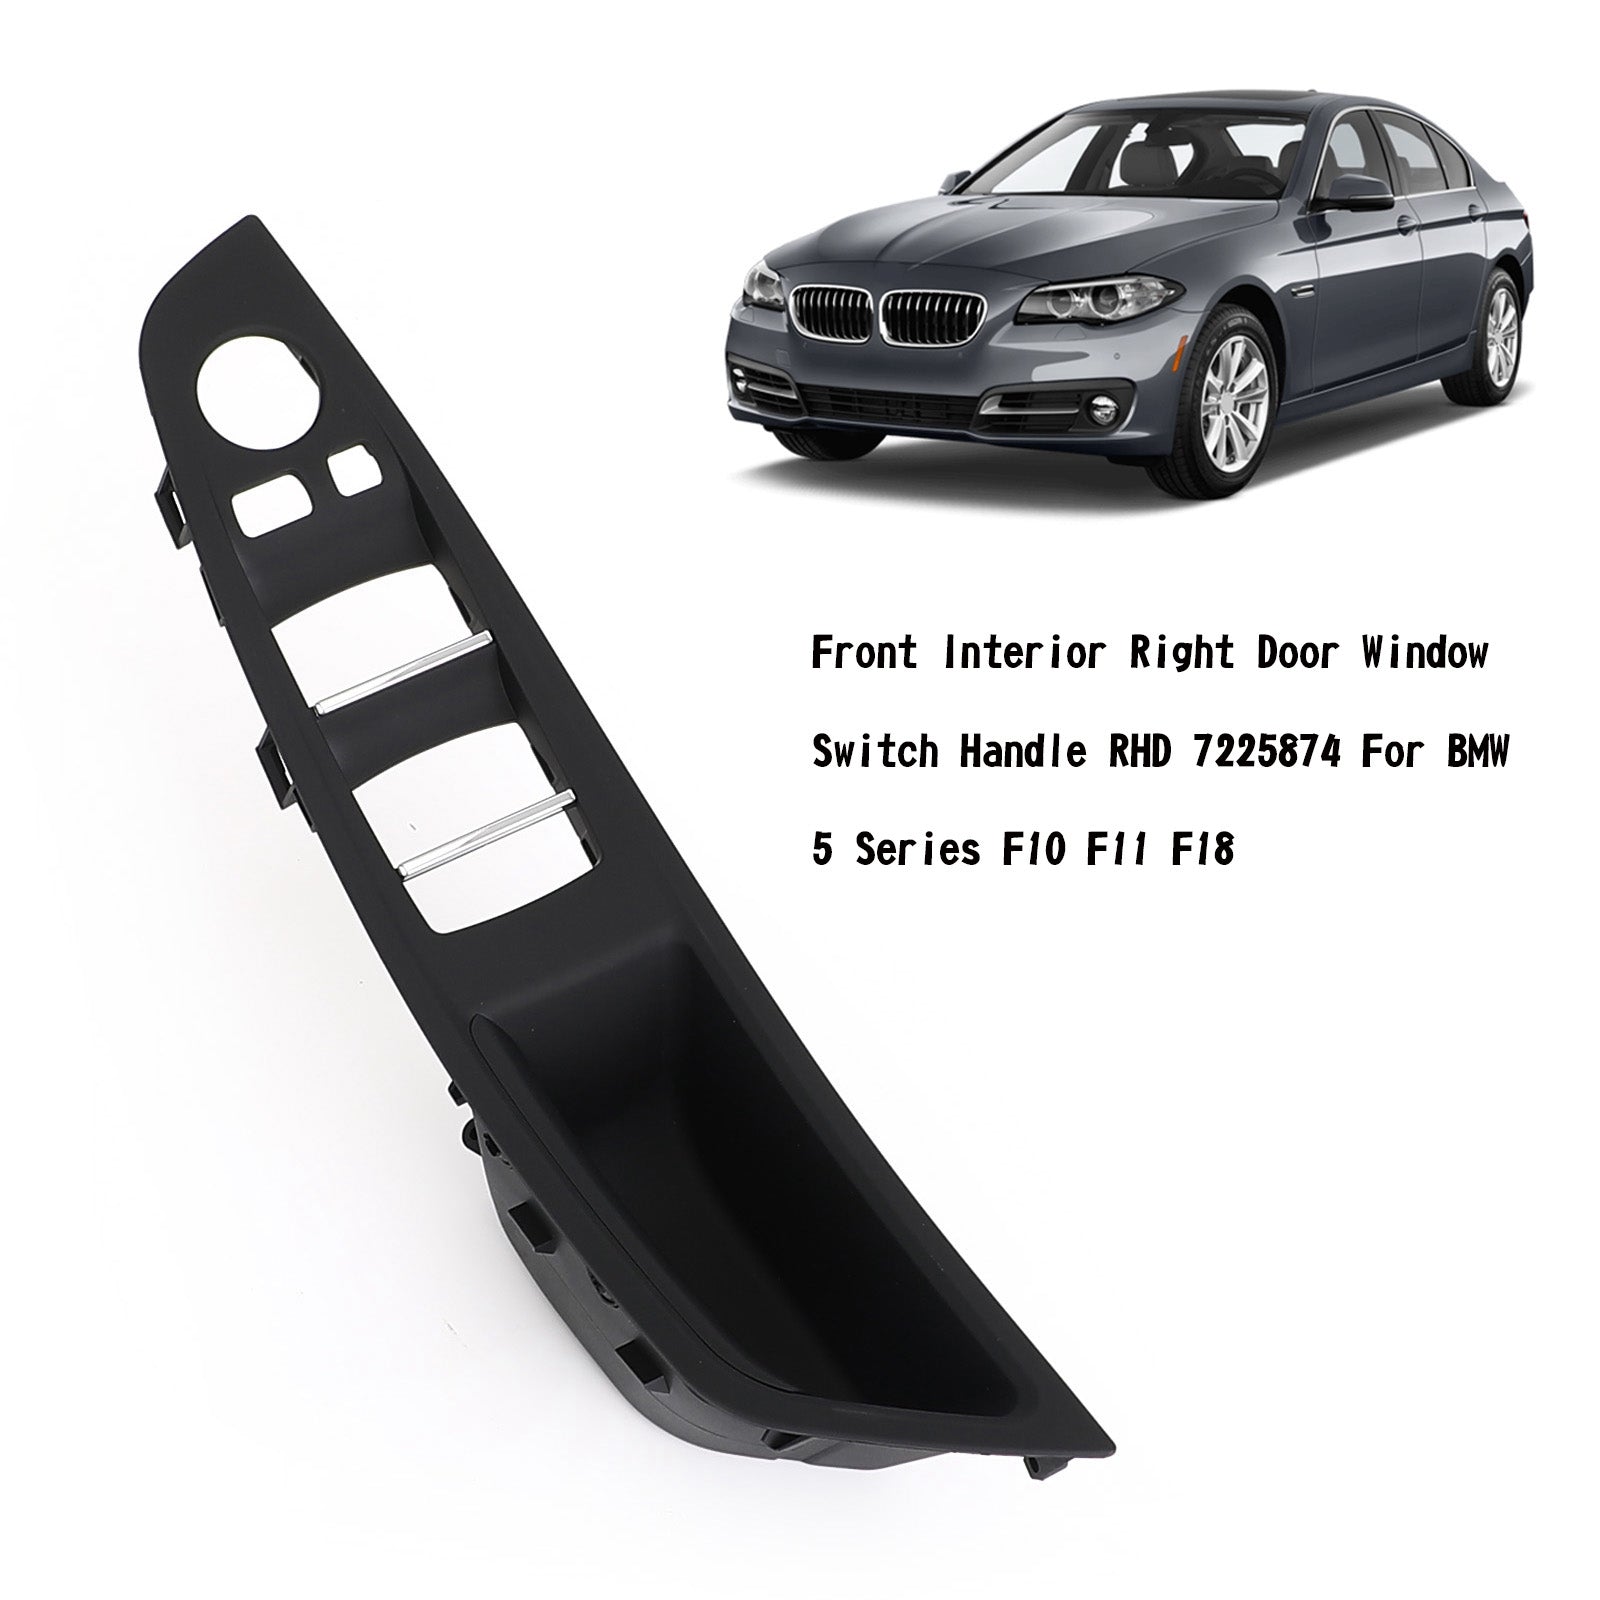 Manija de interruptor de ventana de puerta interior derecha RHD para BMW 5 Series F10 F11 F18 genérico